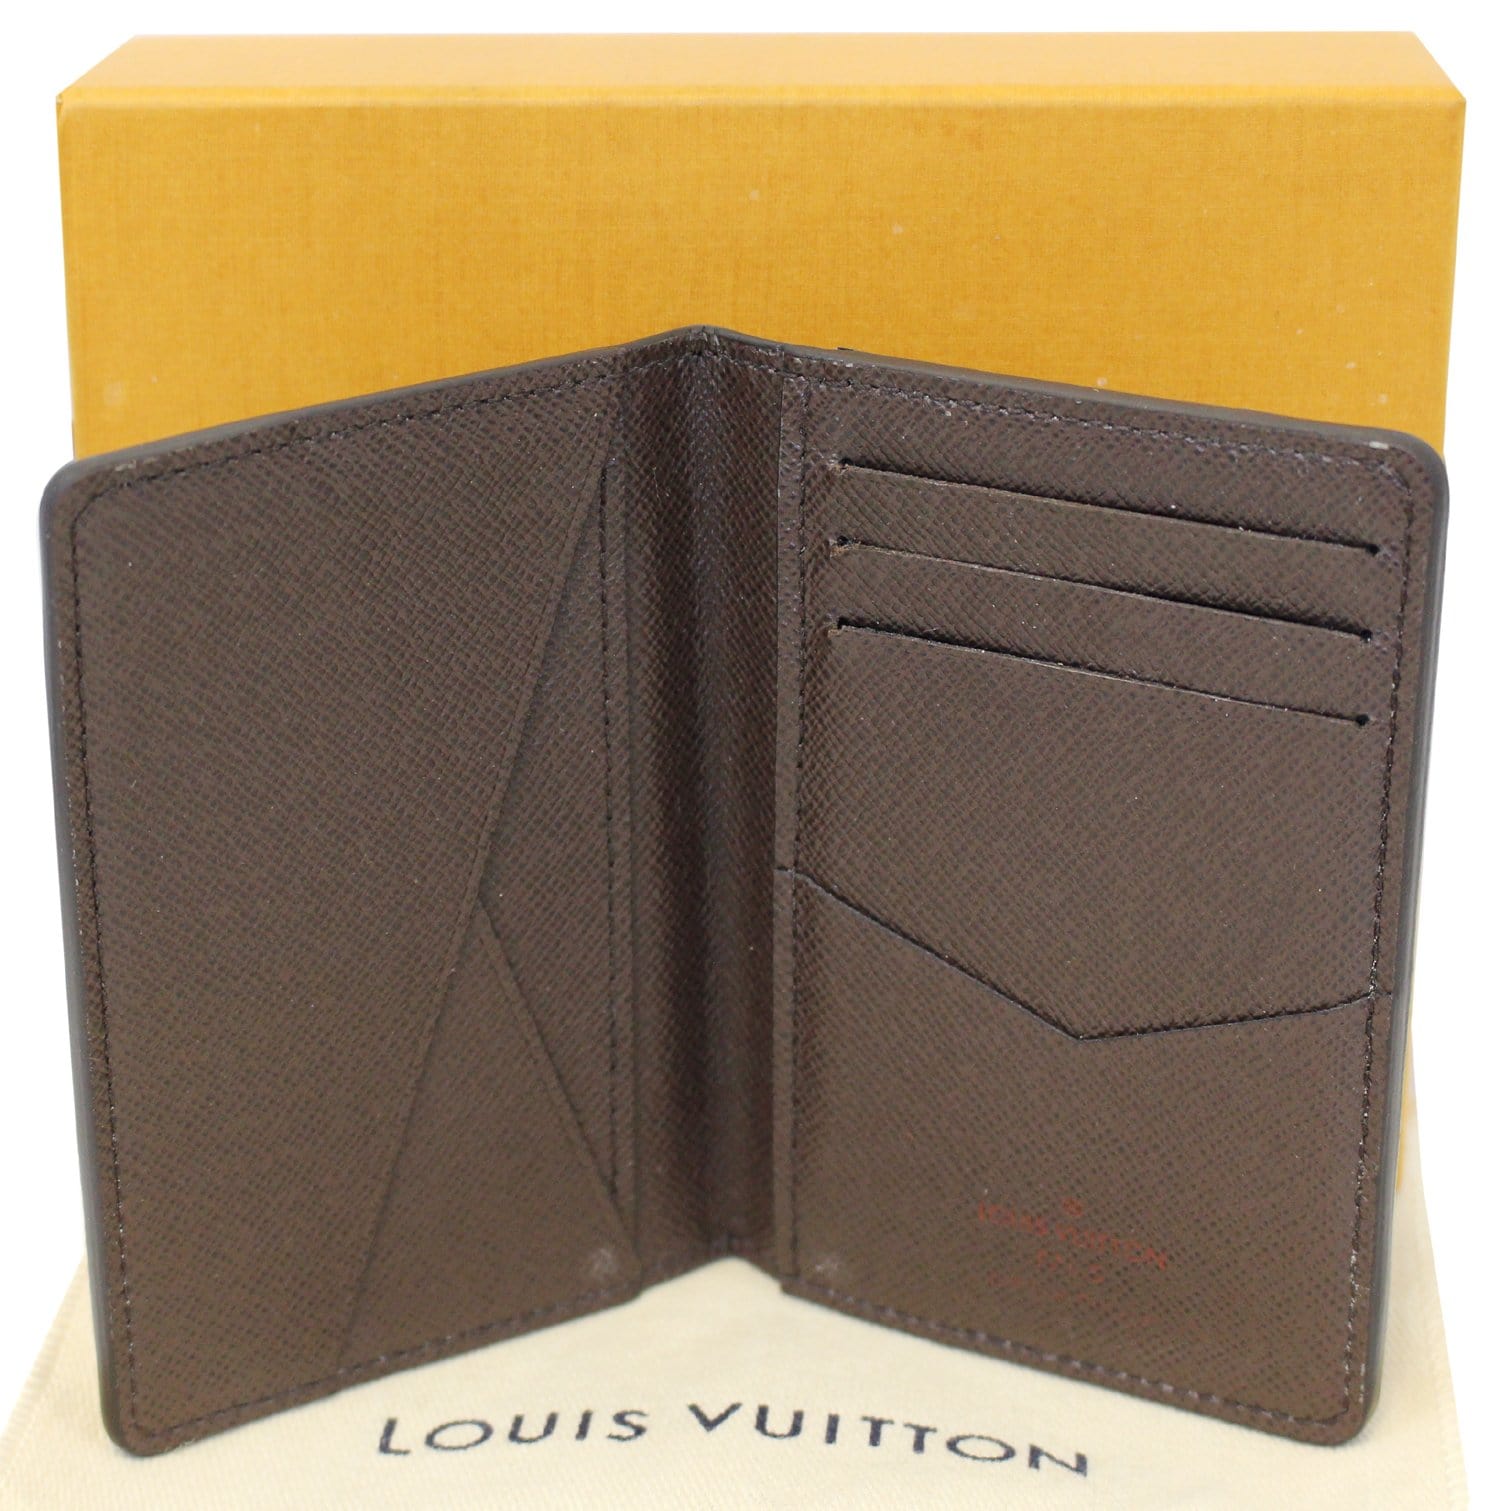 Louis Vuitton - Damier Ebene Multi Pocket Organizer in Italy